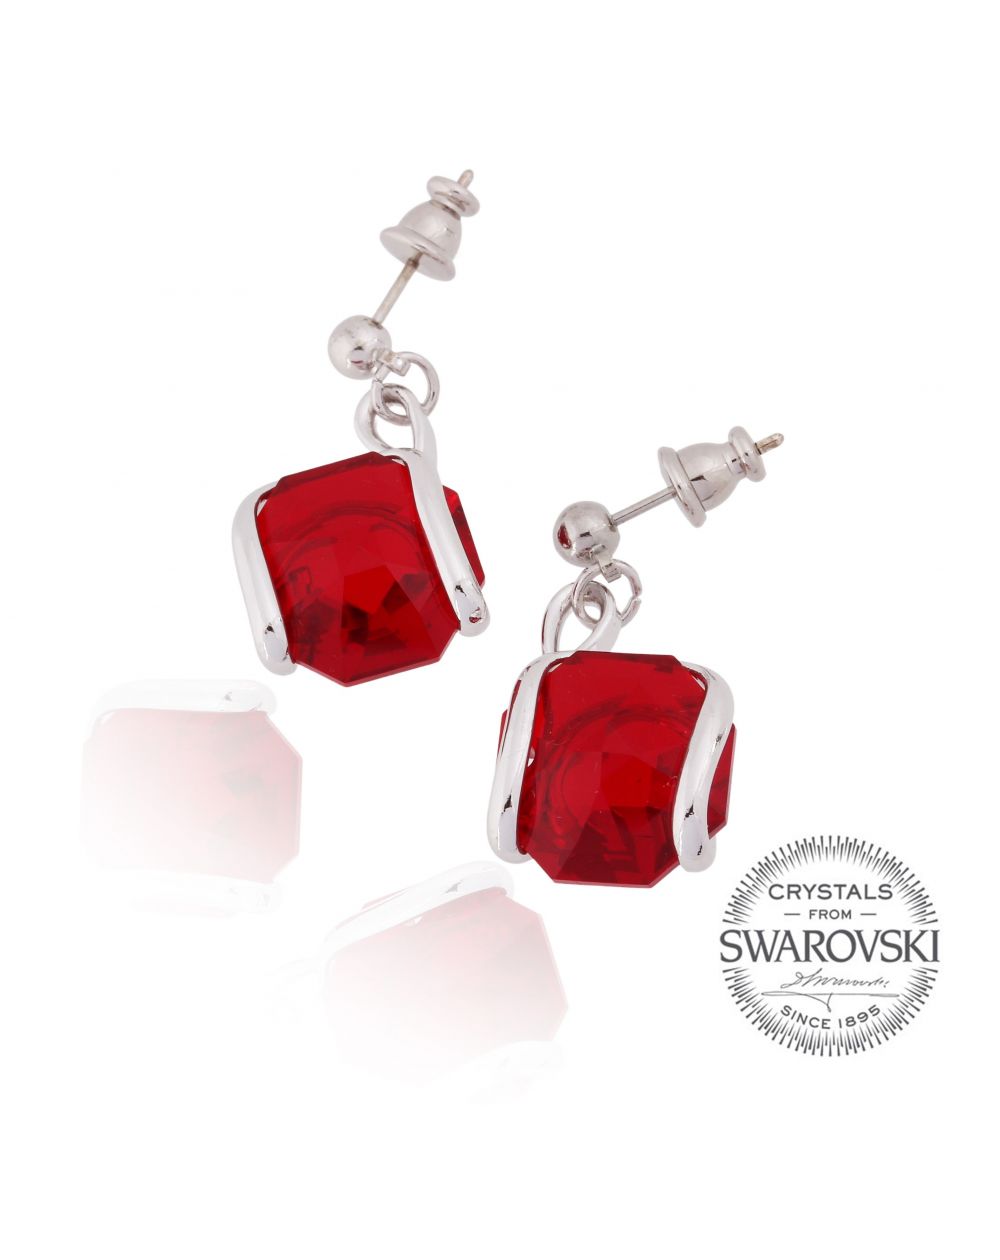 Marazzini - Earrings Swarovski crystal red siam